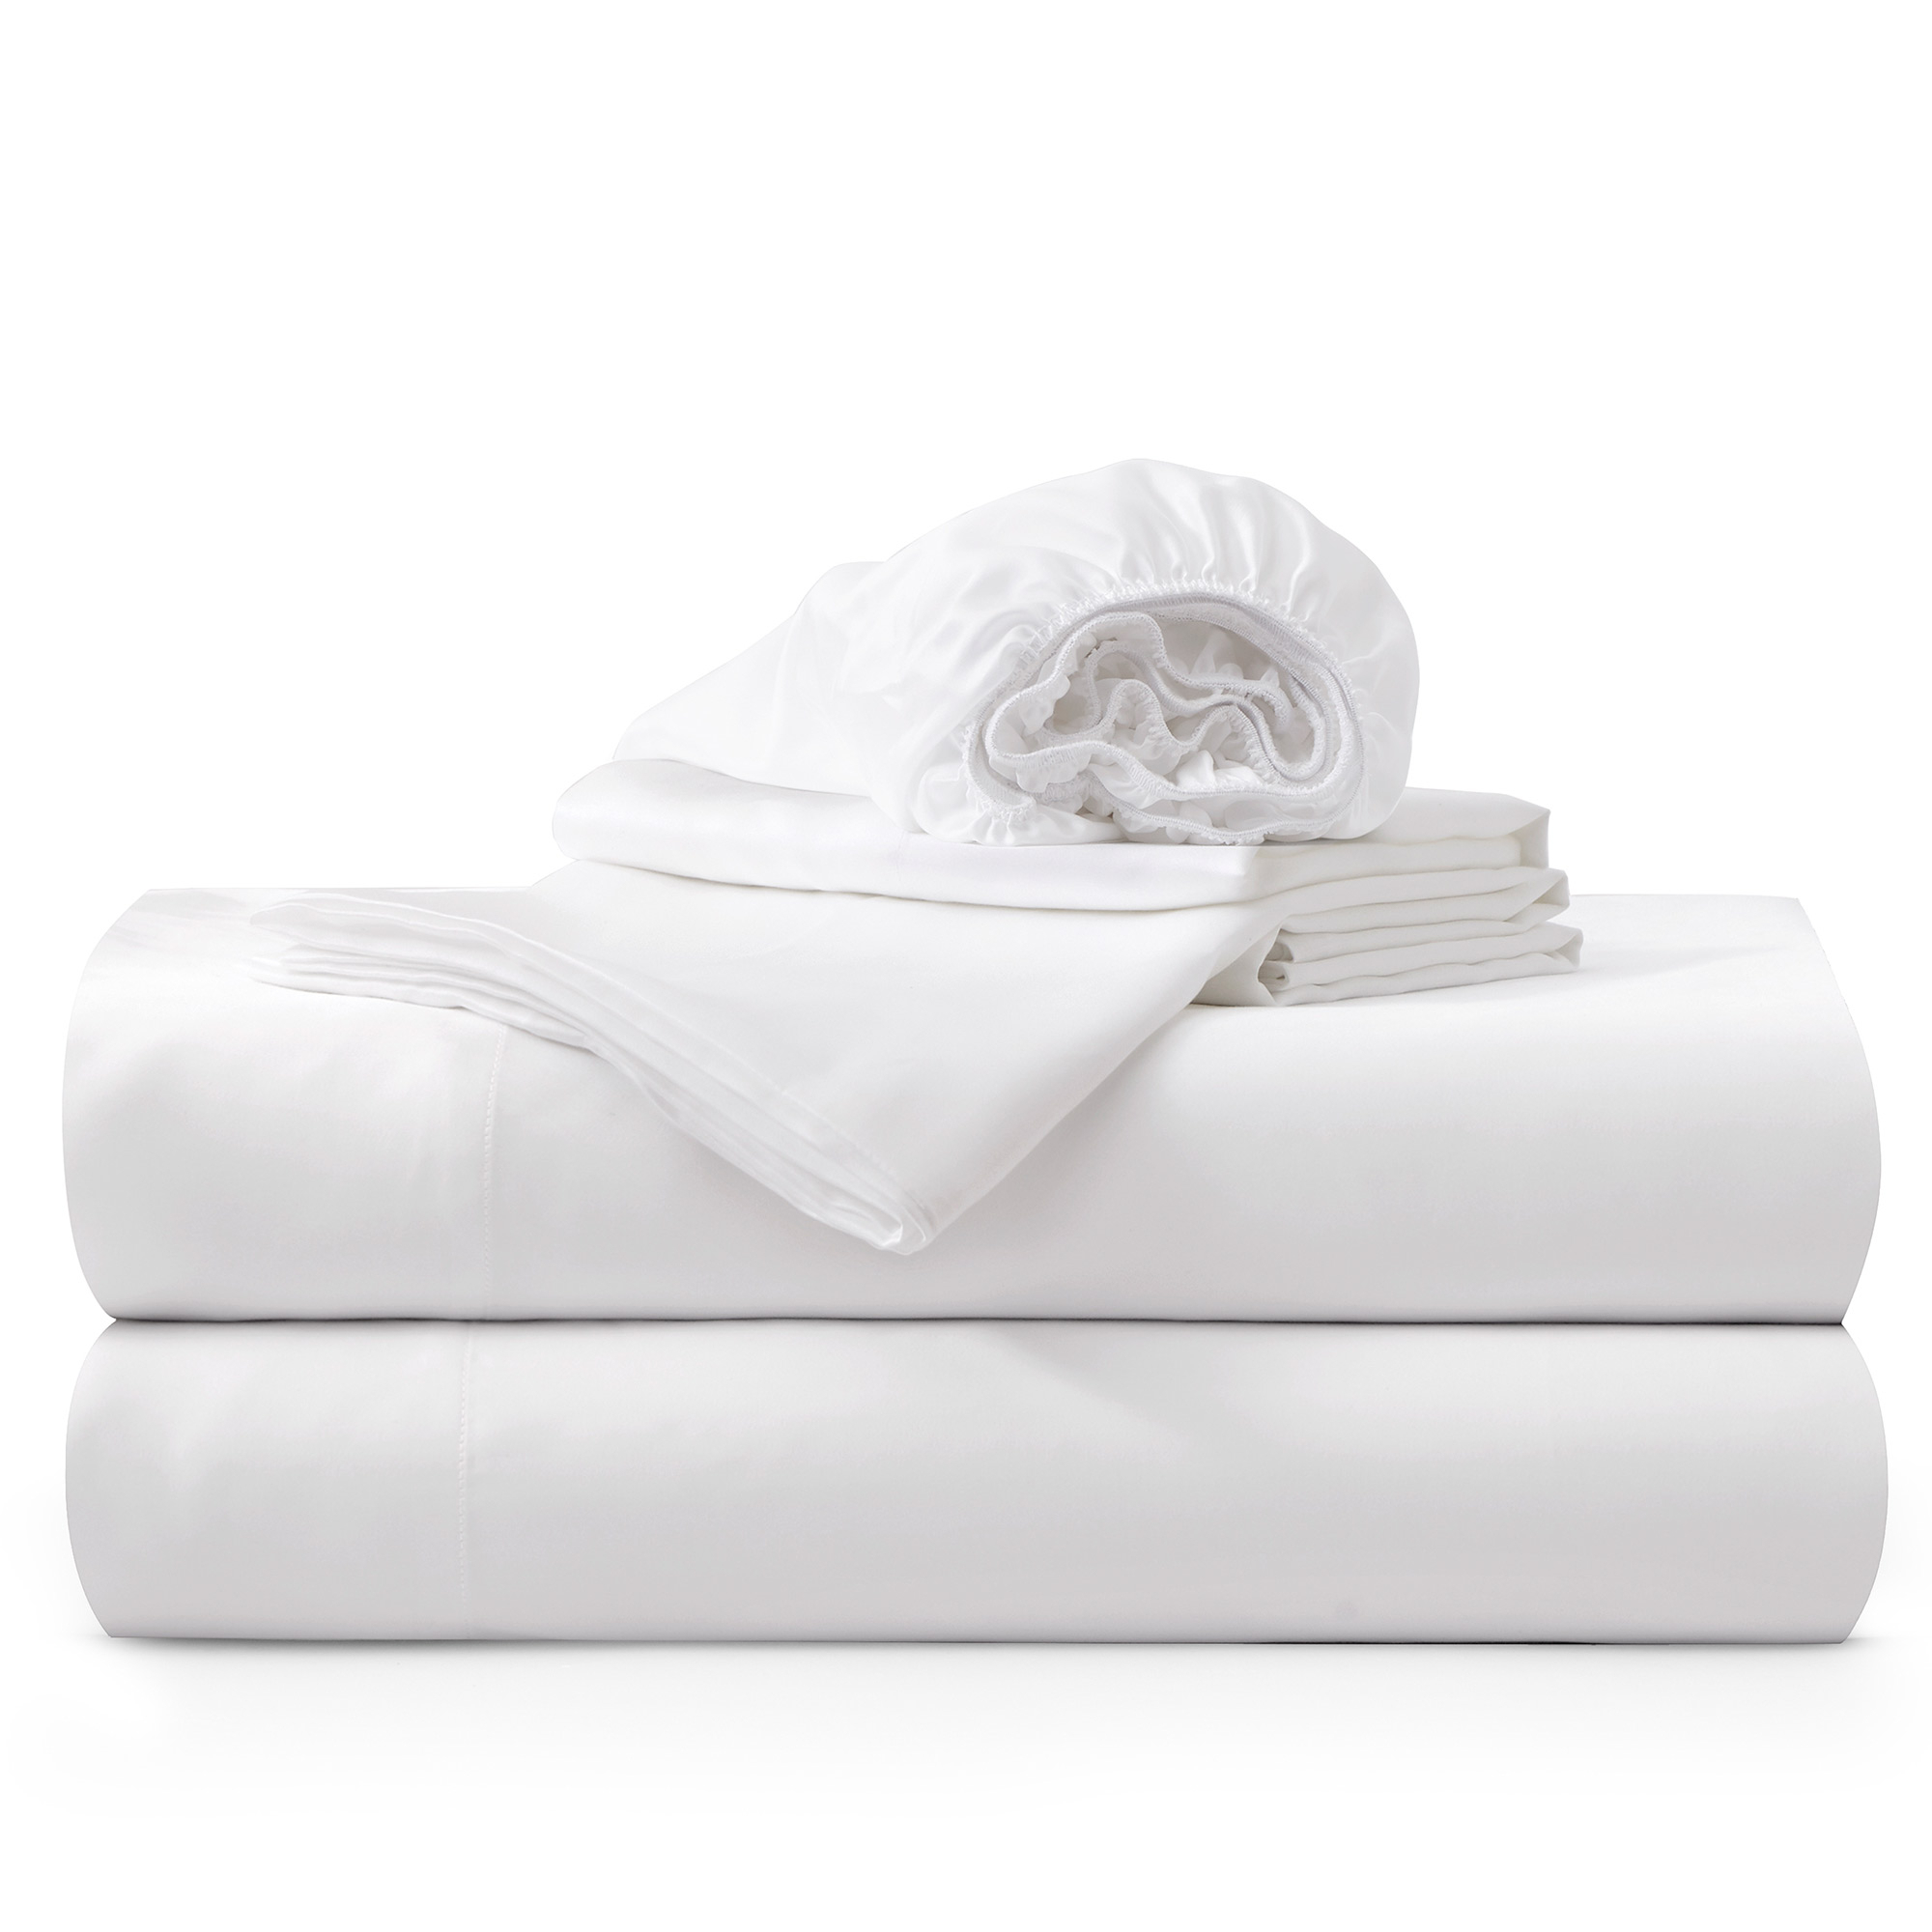 Silky Soft TENCELâ¢ Lyocell Cooling Sheet Set-Breathability And Moisture-wicking Bedding Set - Lucent White, Queen